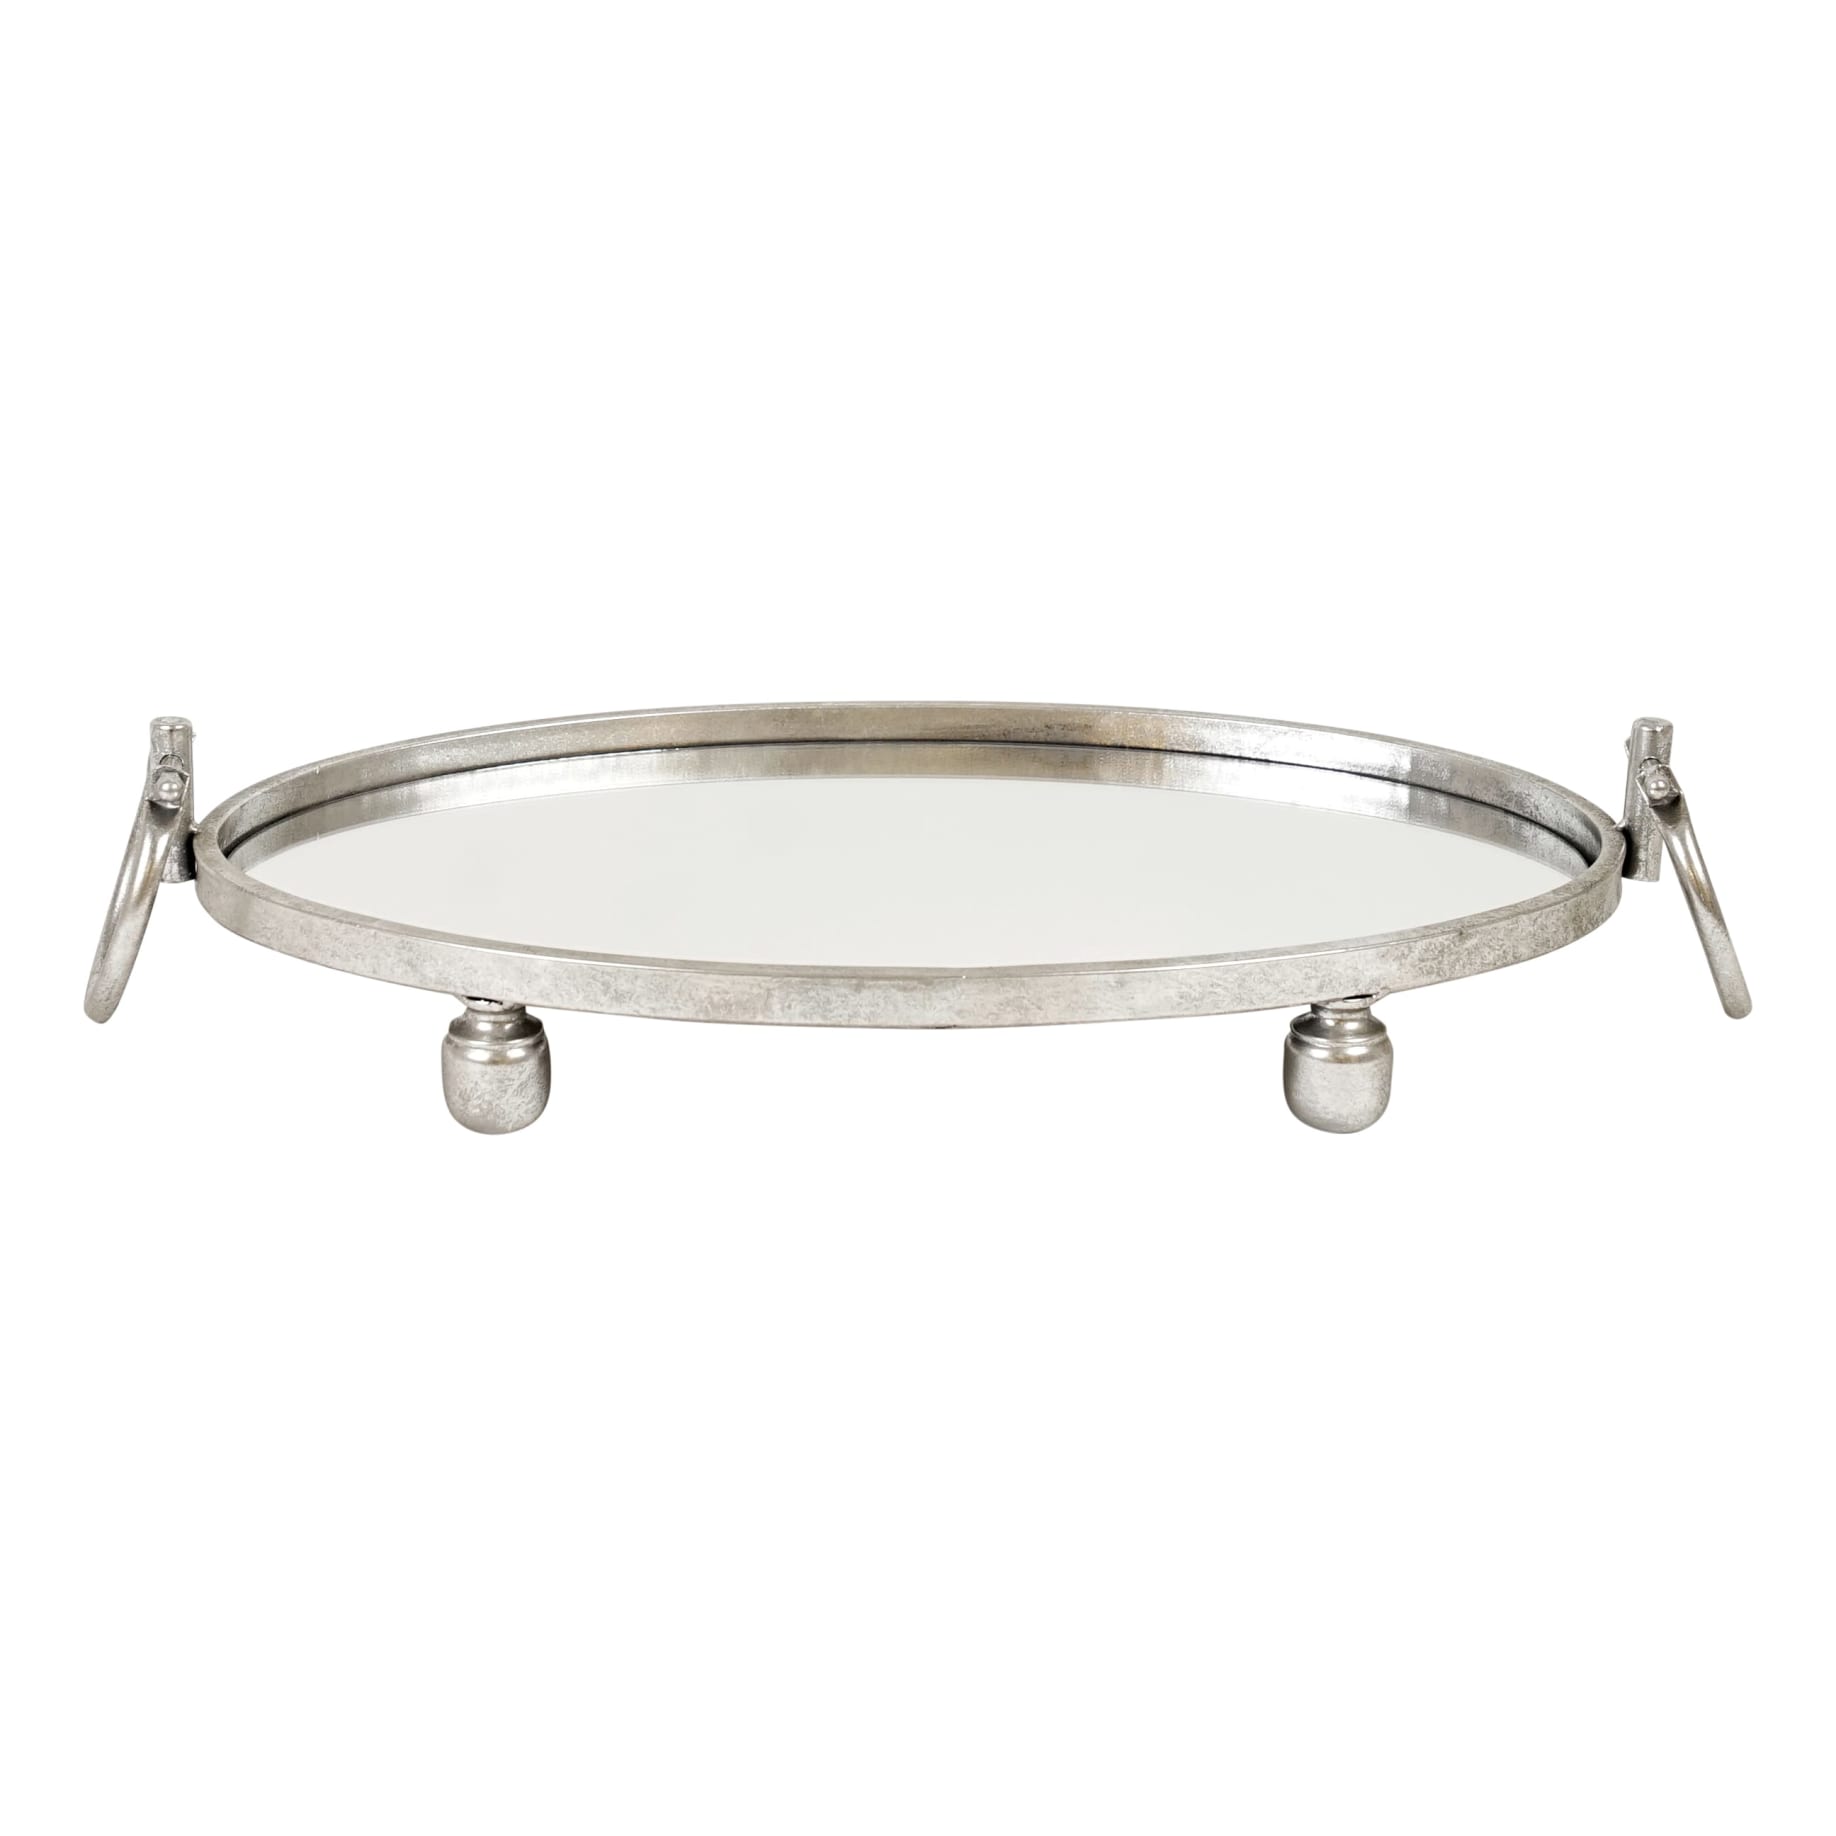 Dover Oval Mirror Tray 58.5x11cm in Silver